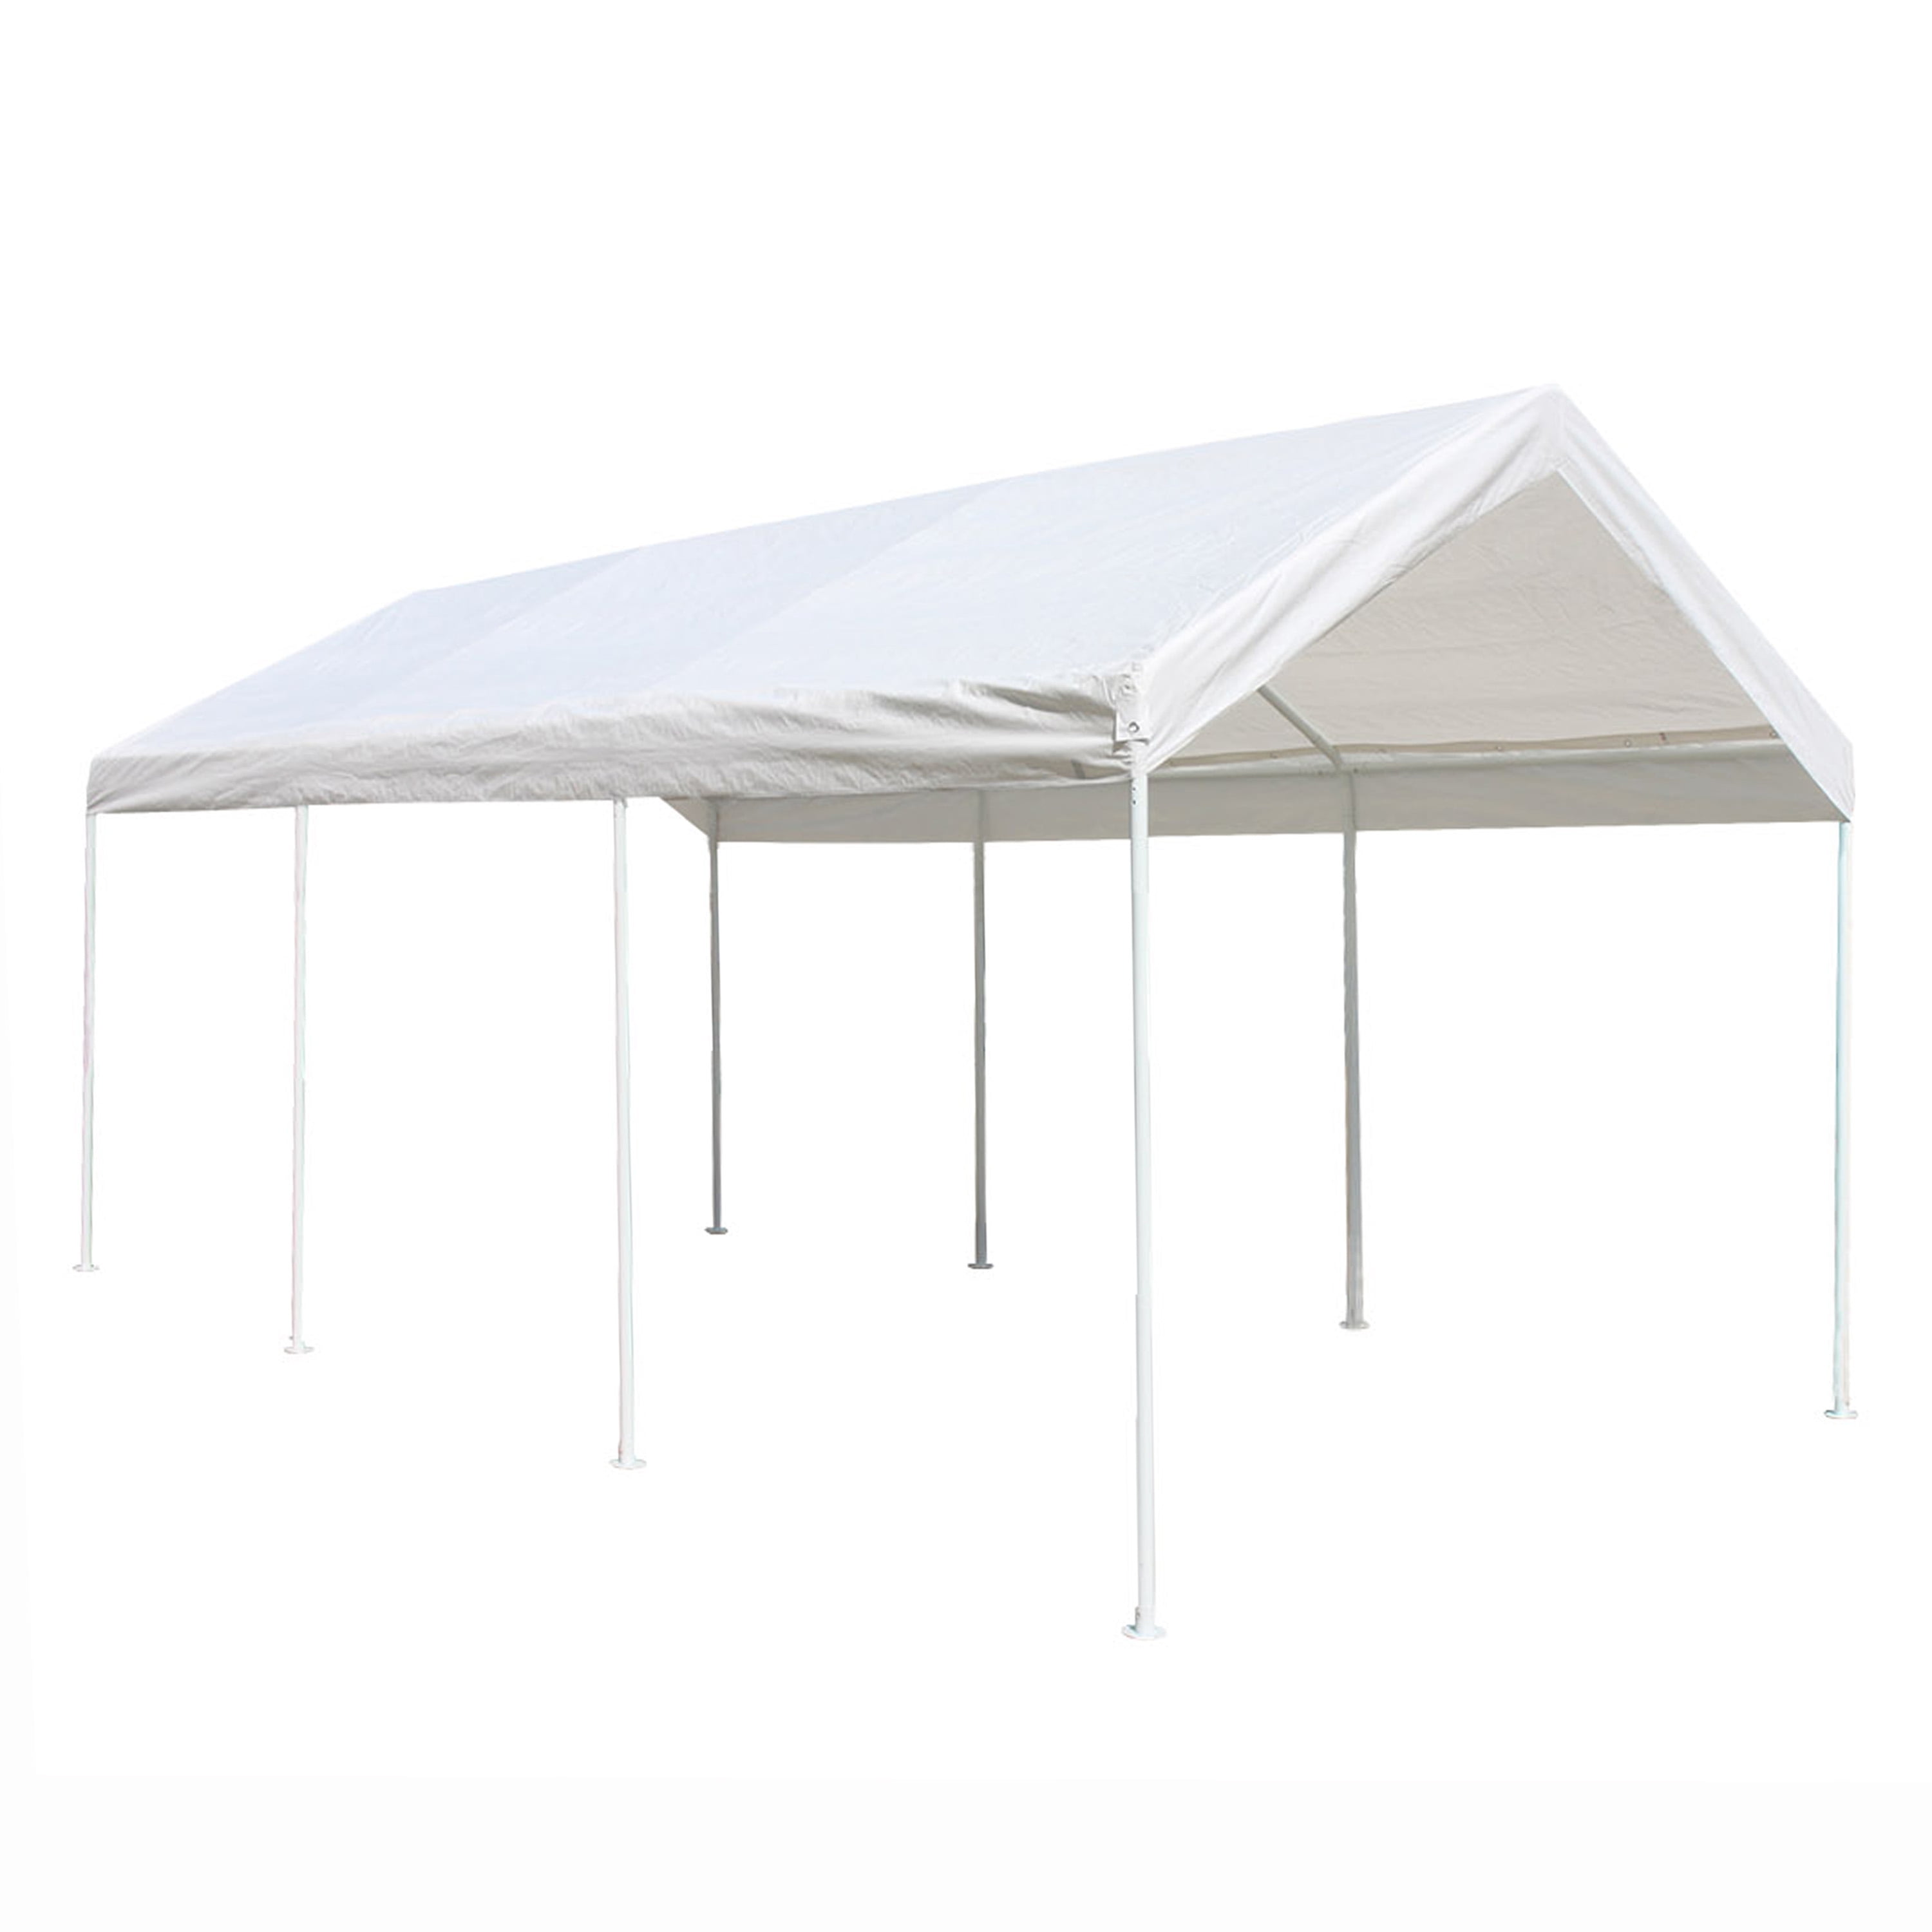 ALEKO Shelter Canopy Picnic Gazebo Party Tent Carport 20 x 10 Ft White 